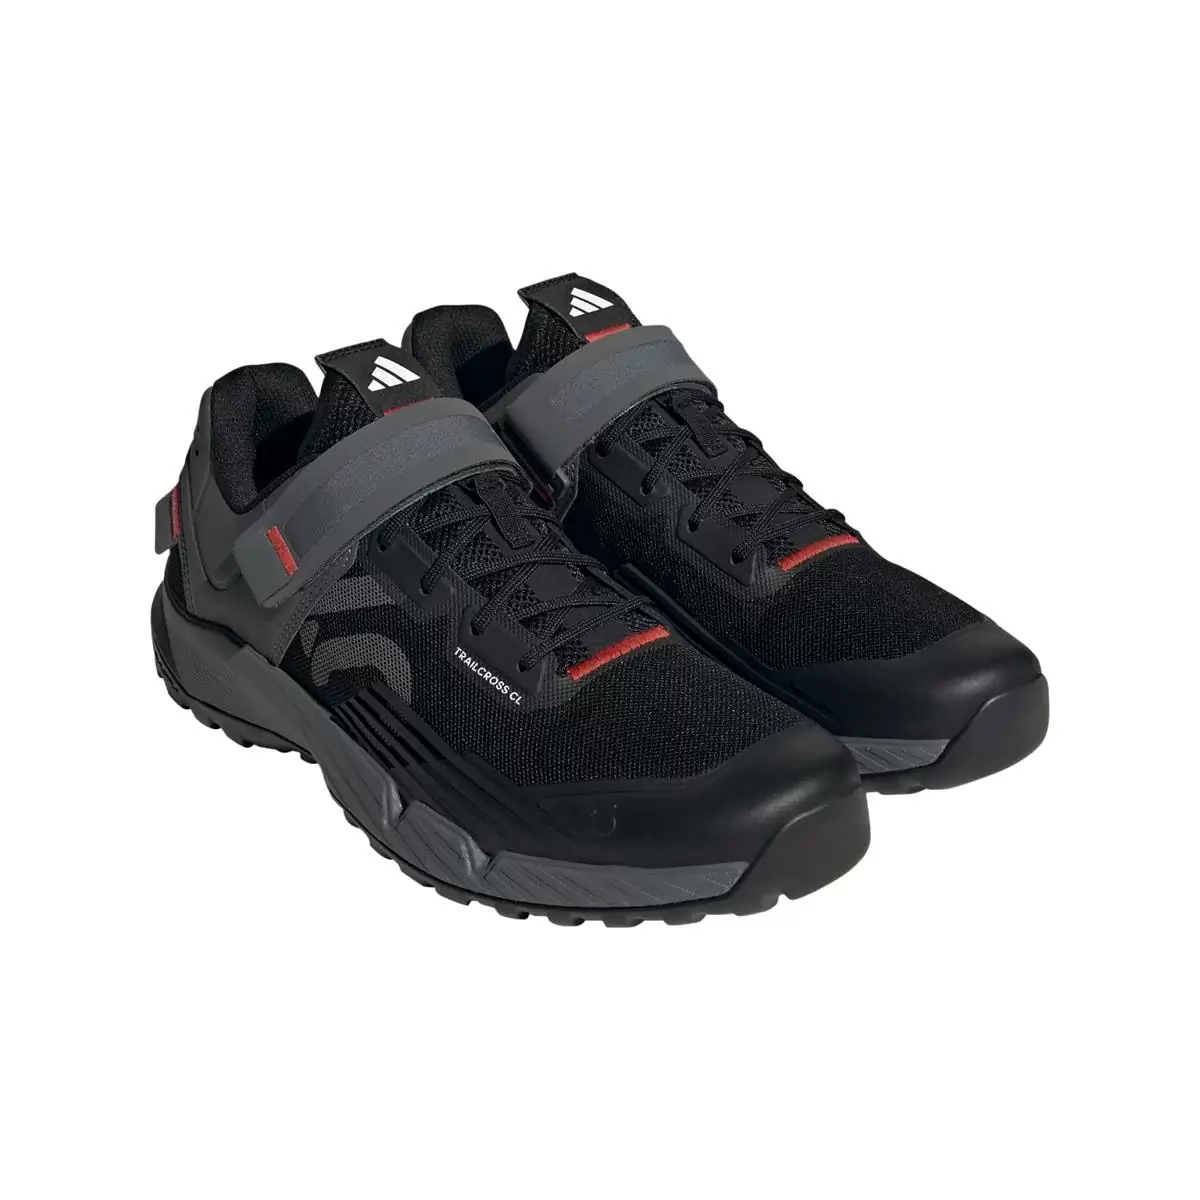 Clip 5.10 Trailcross MTB Schuhe Schwarz/Grau Größe 44 #1